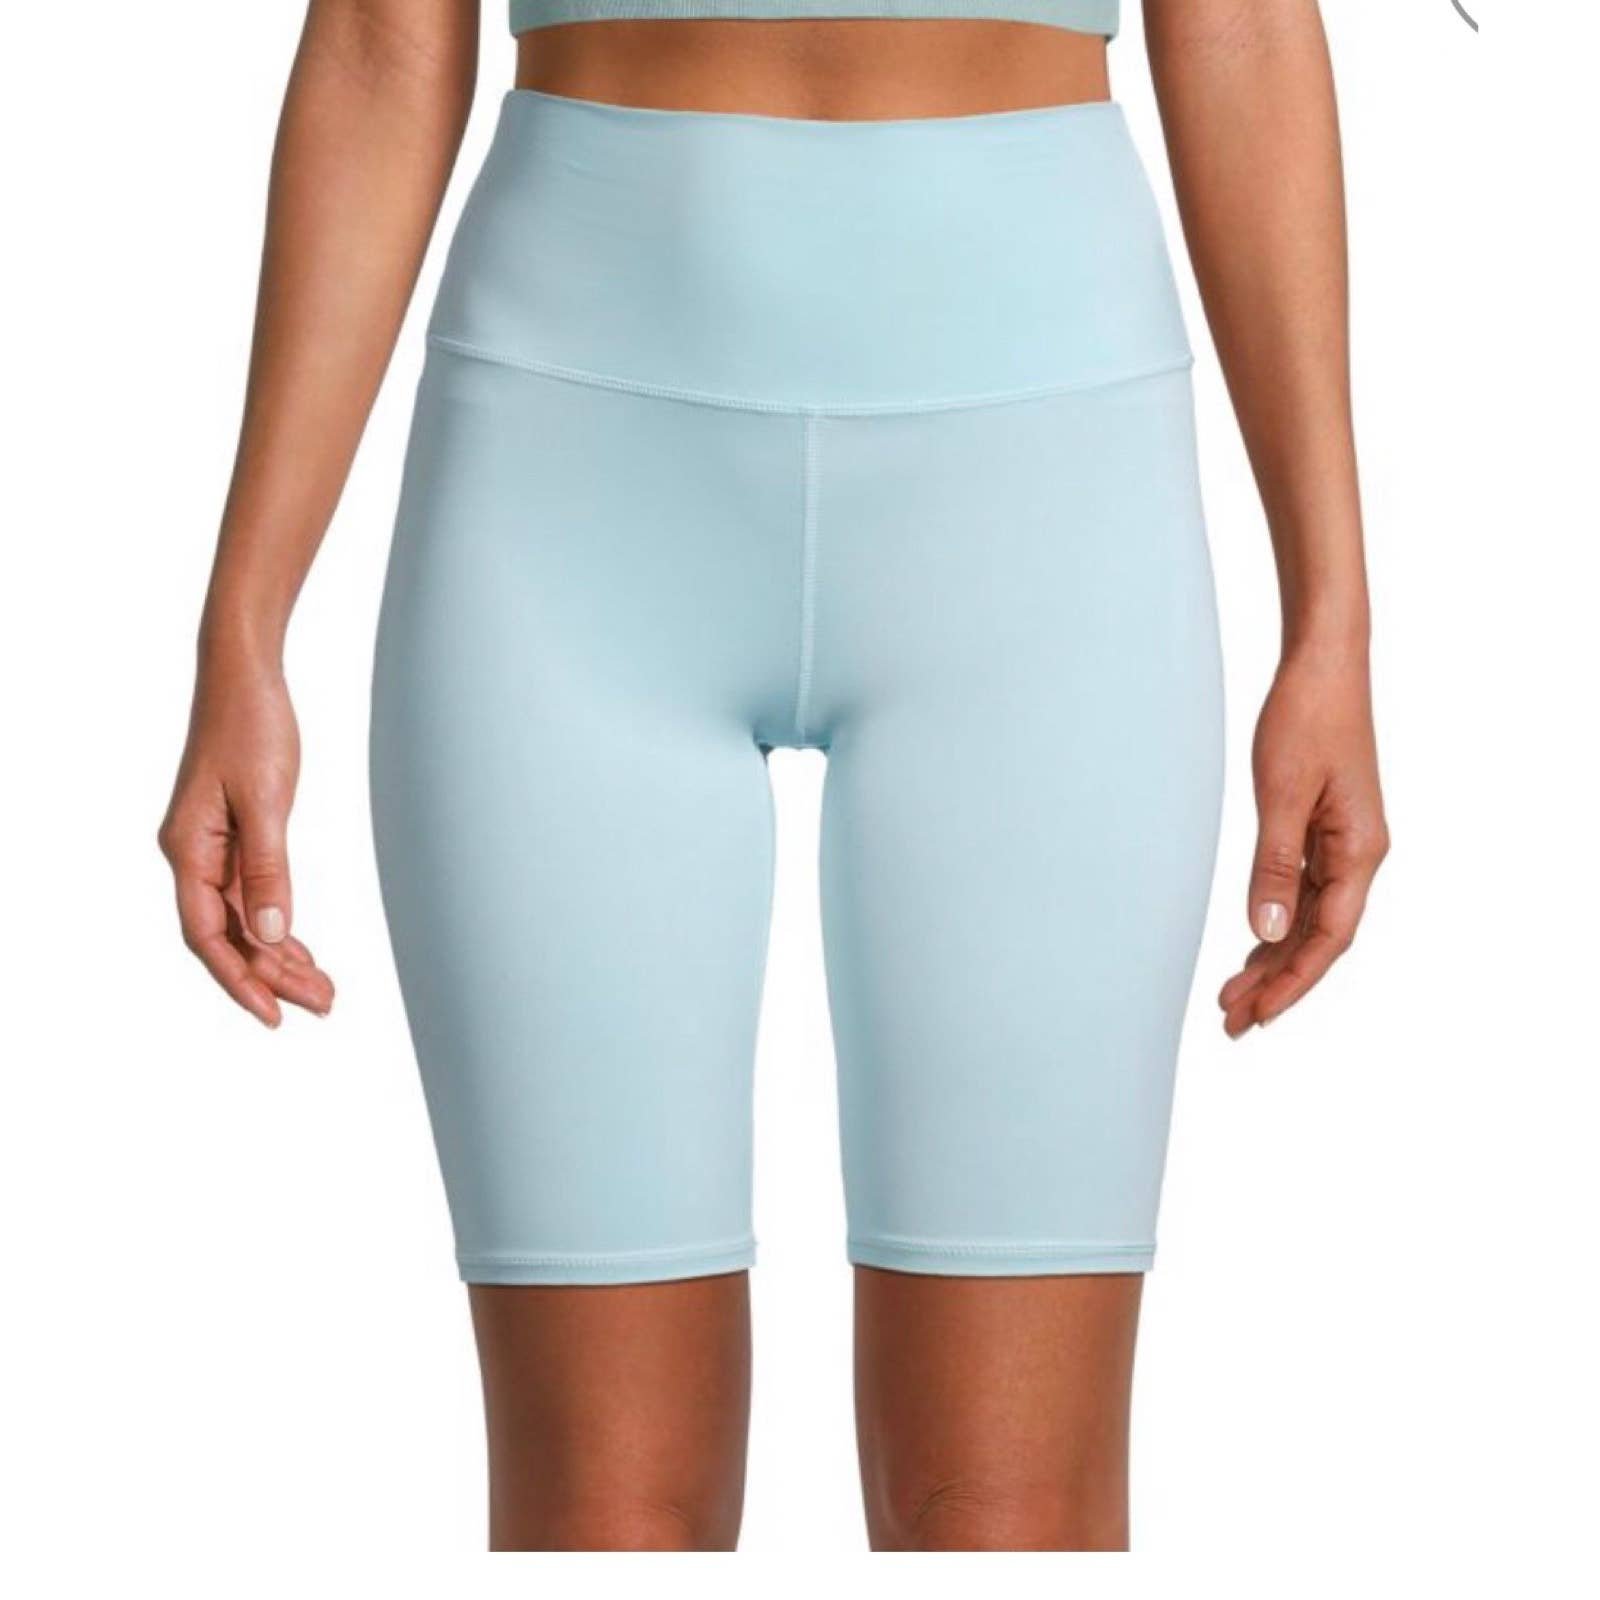 Perfect Alice + olivia by Stacey Bendet Athletic Light Blue Biker Shorts XS OisFl1mLa best sale